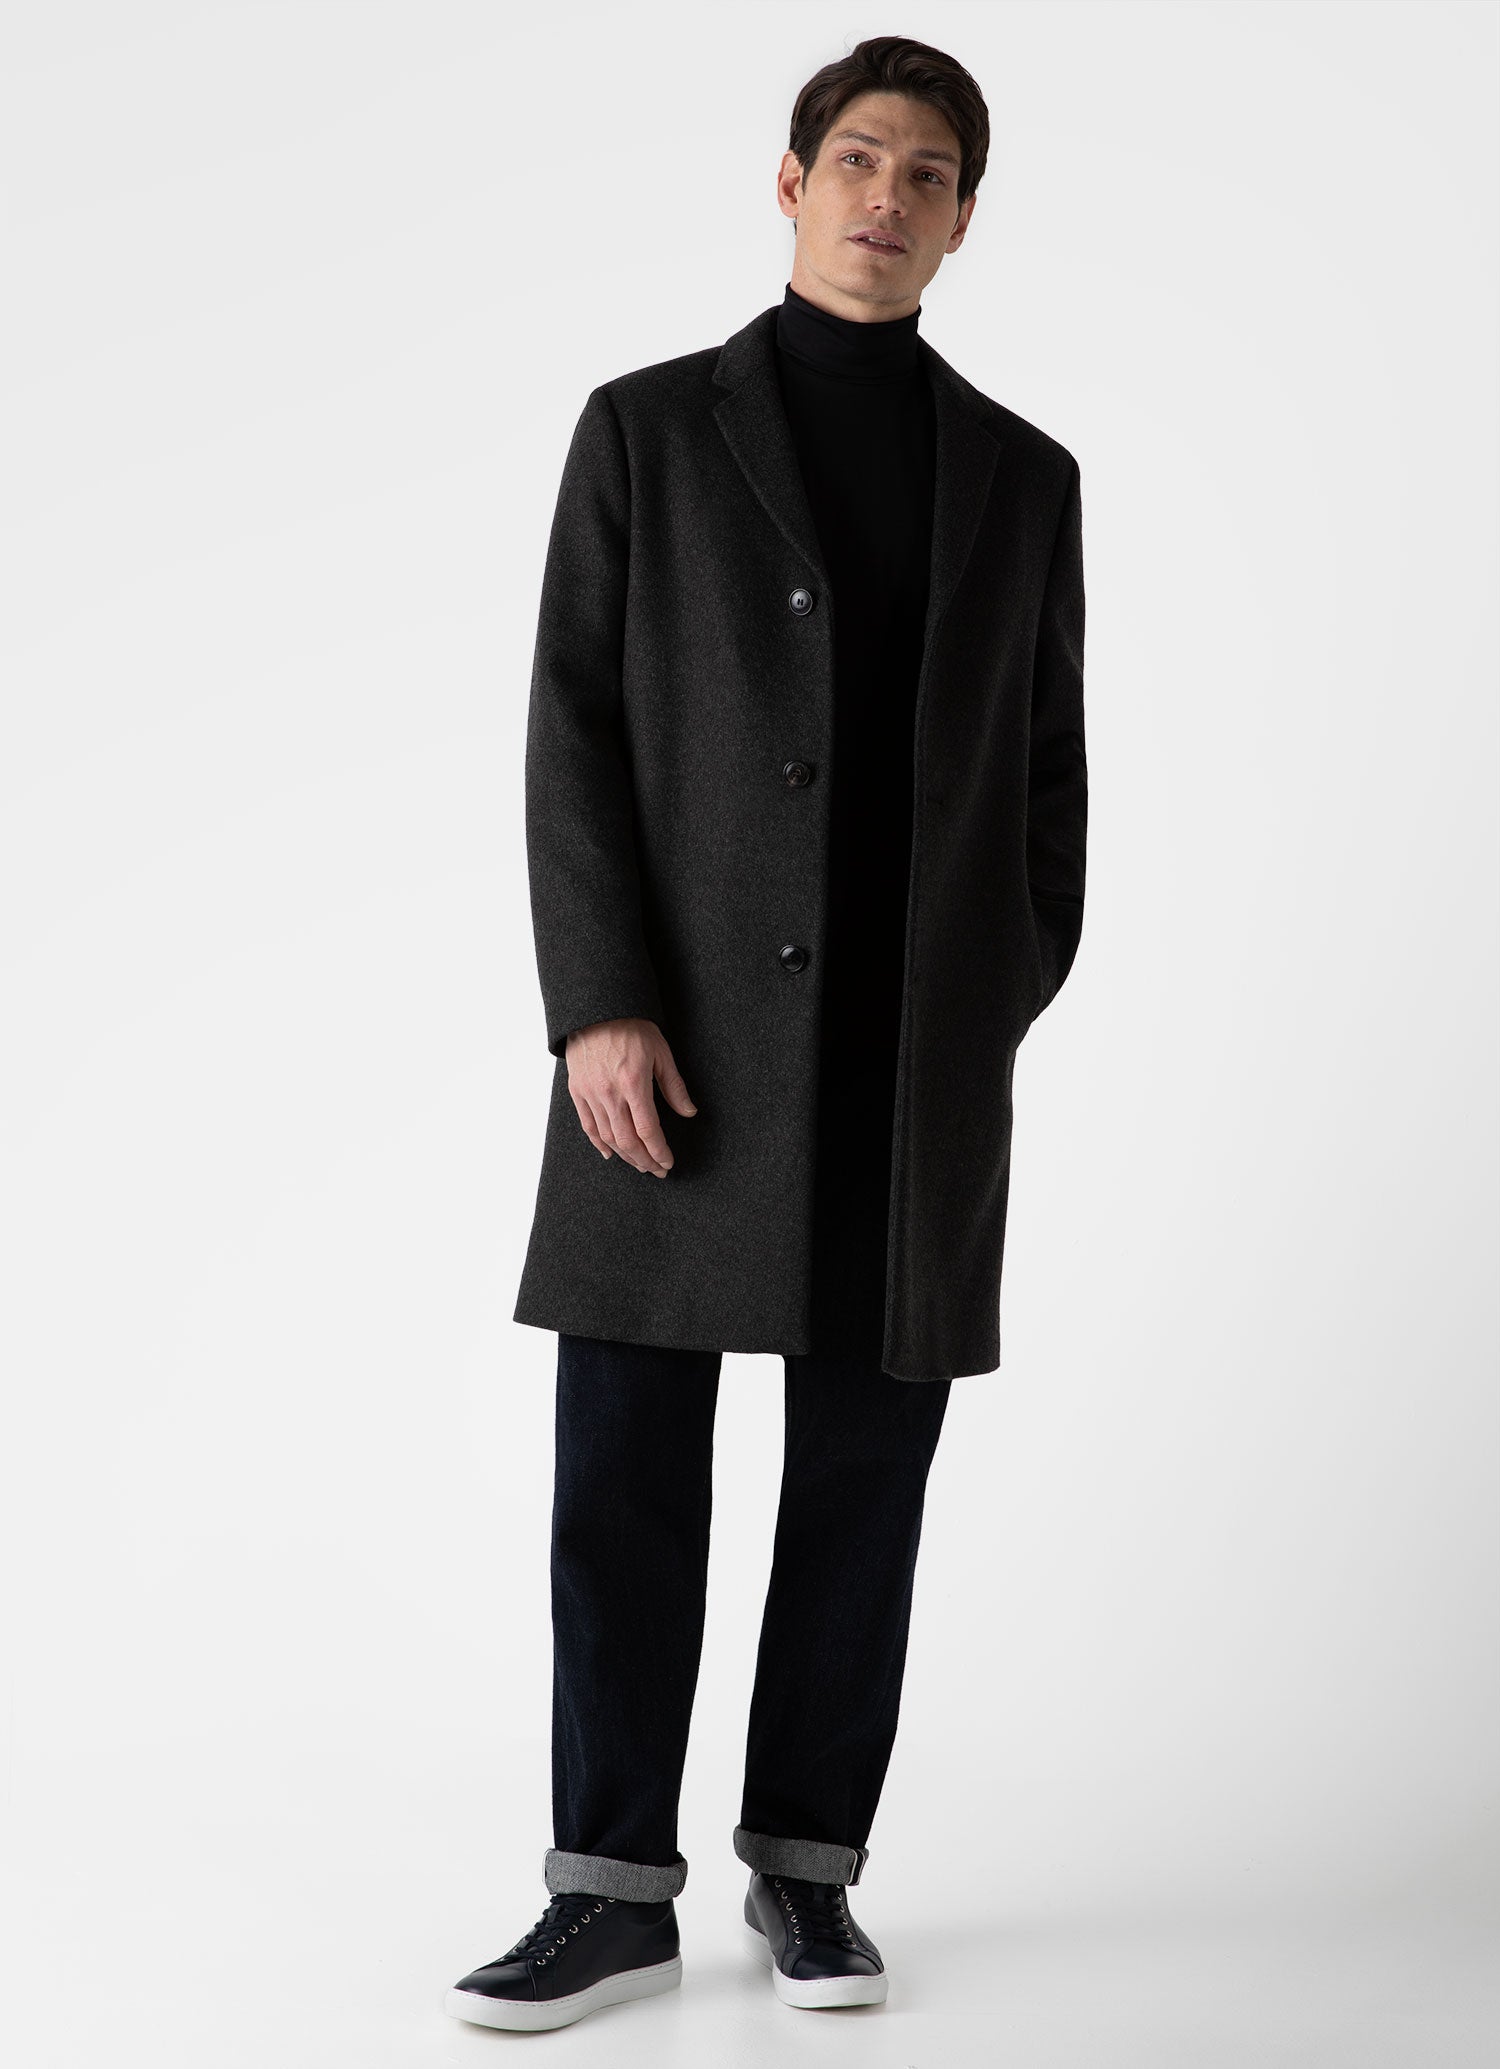 Men's Wool Cashmere Overcoat in Charcoal Melange | Sunspel